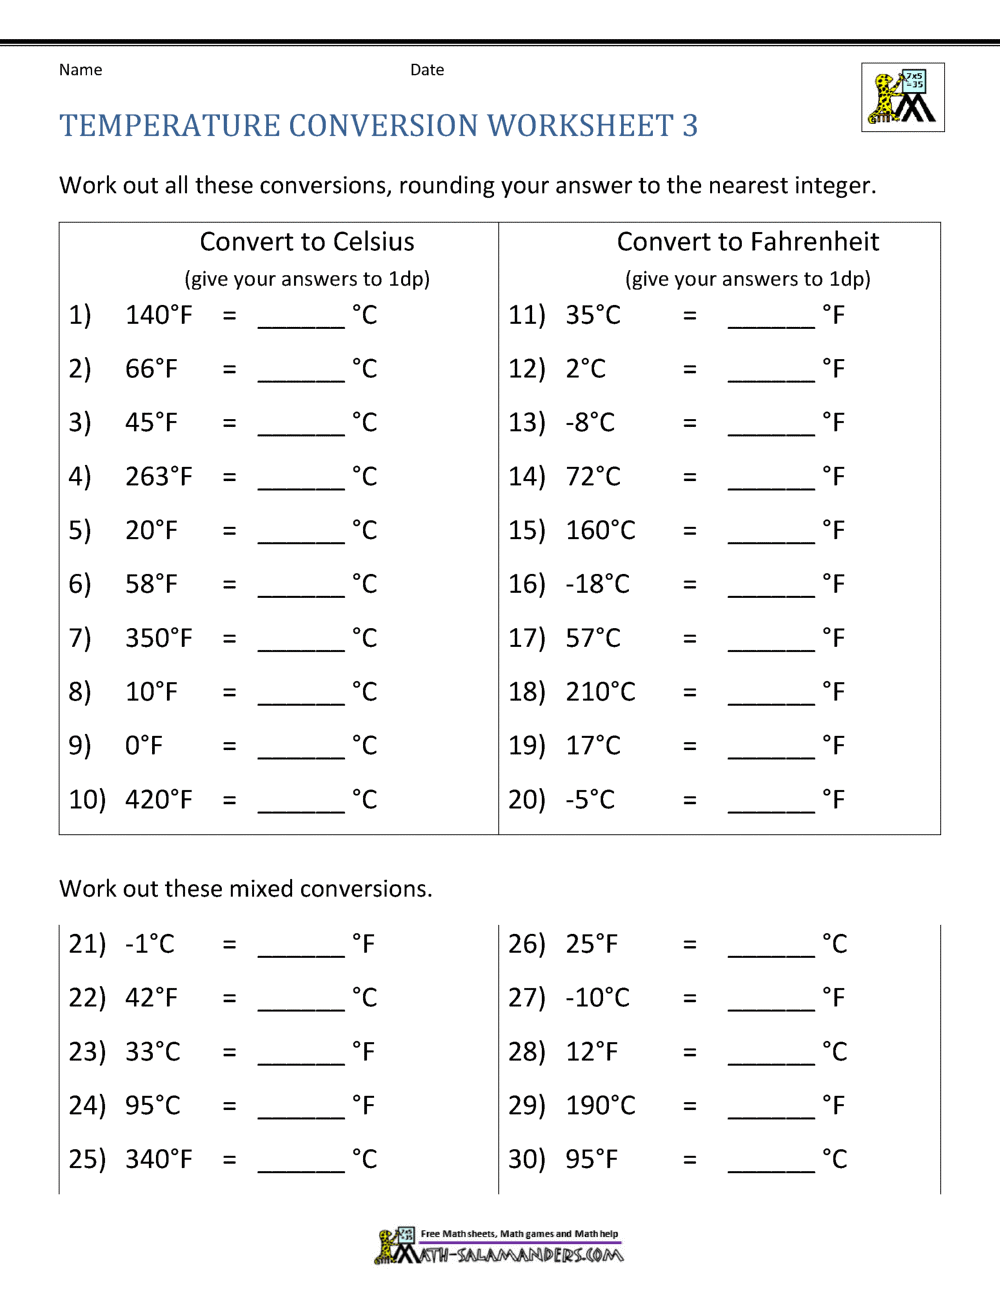 Temperature Conversion Worksheet Throughout Temperature Conversion Worksheet Answers